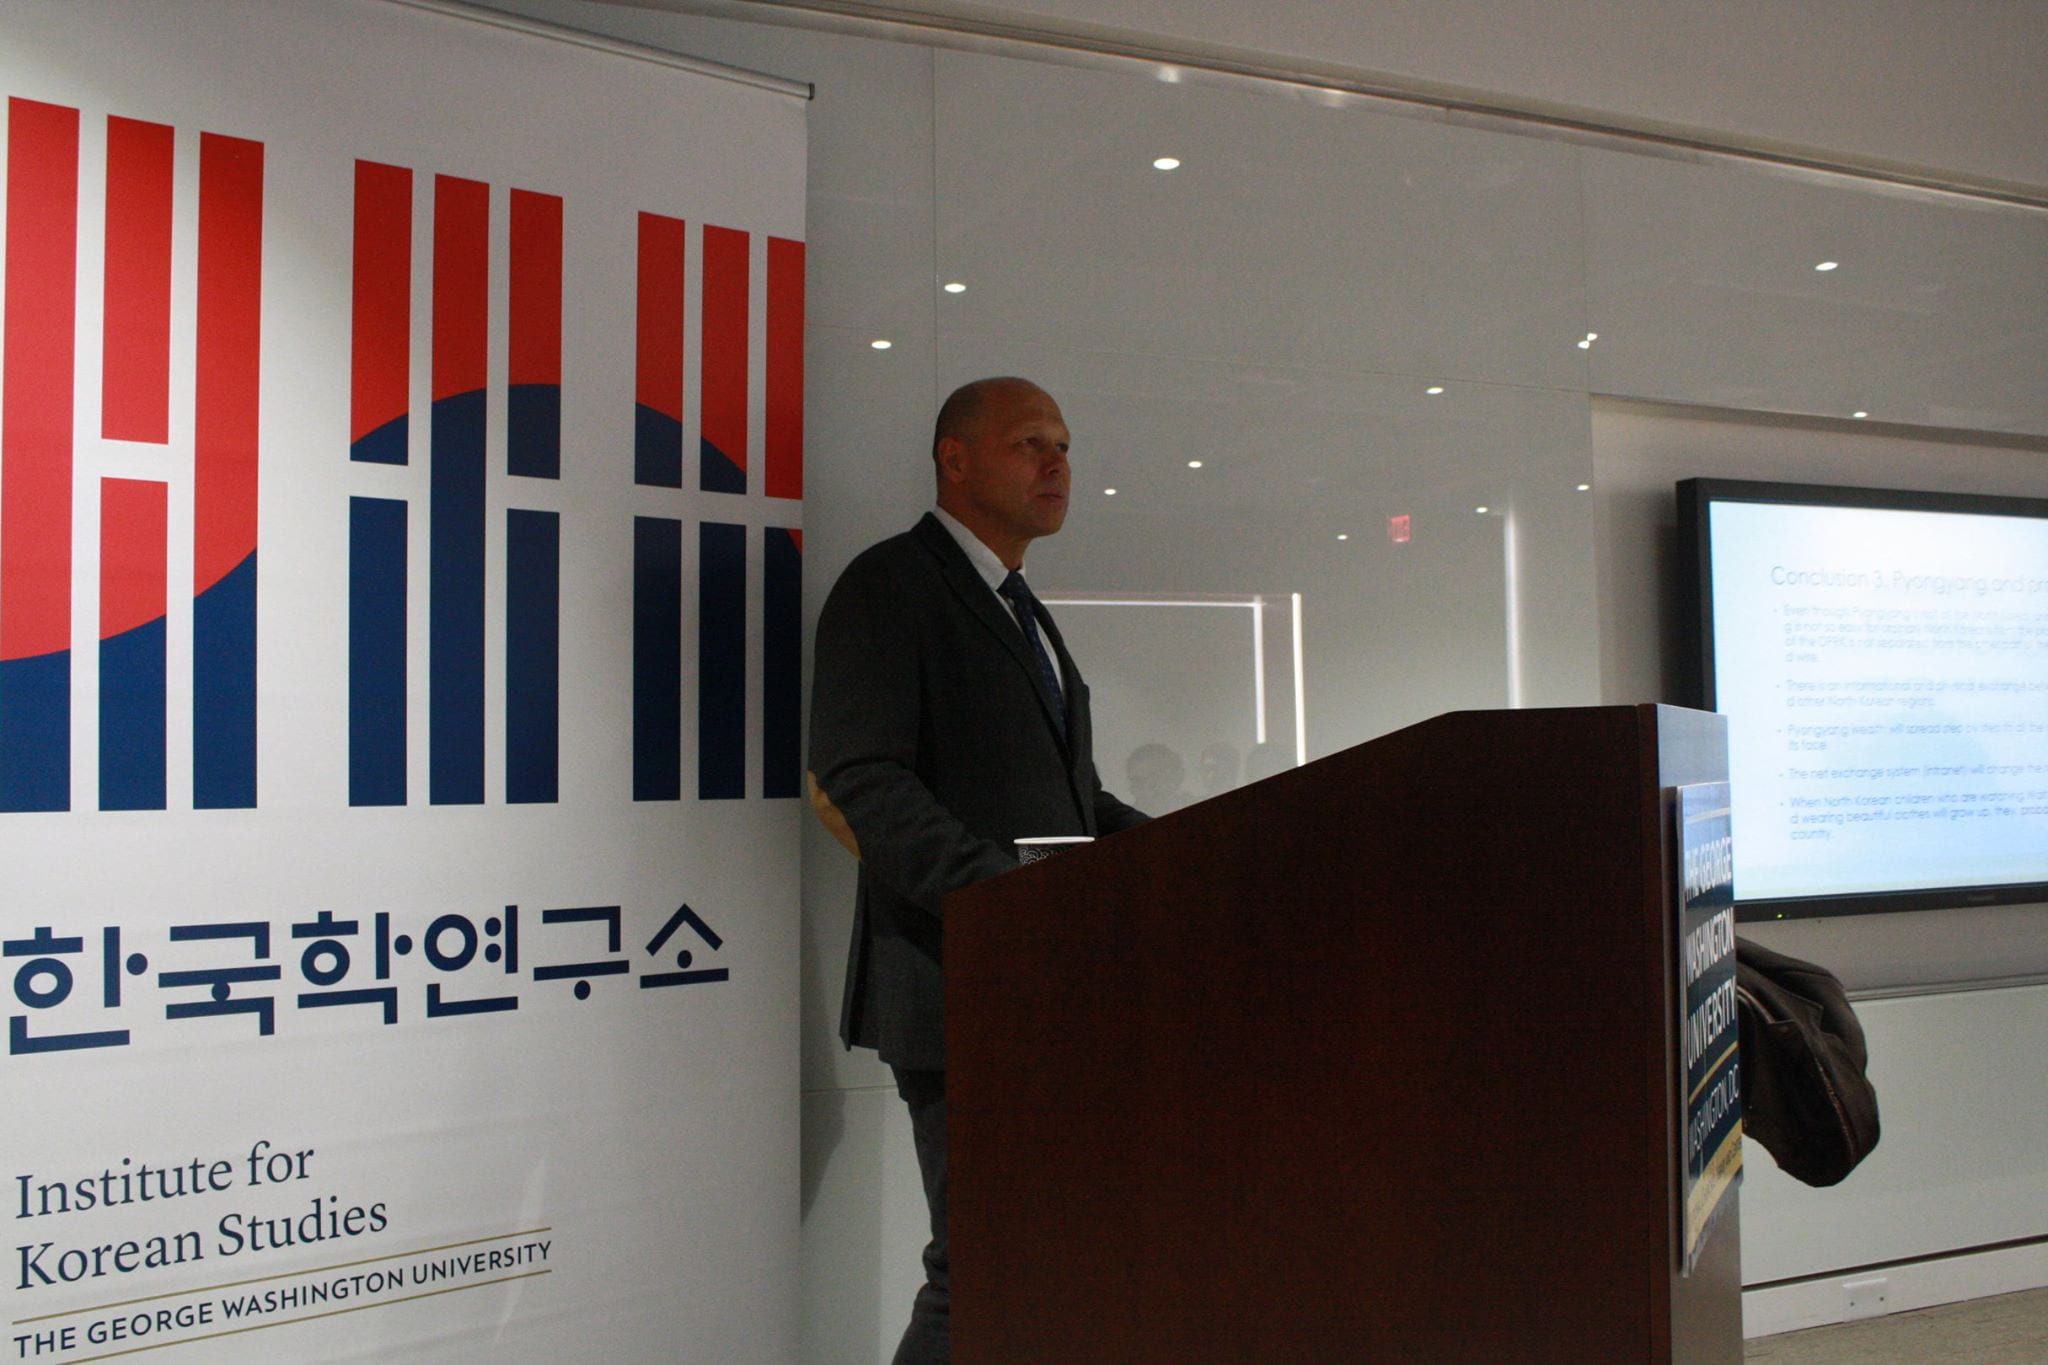 Sergei Kurbanov standing at podium giving presentation